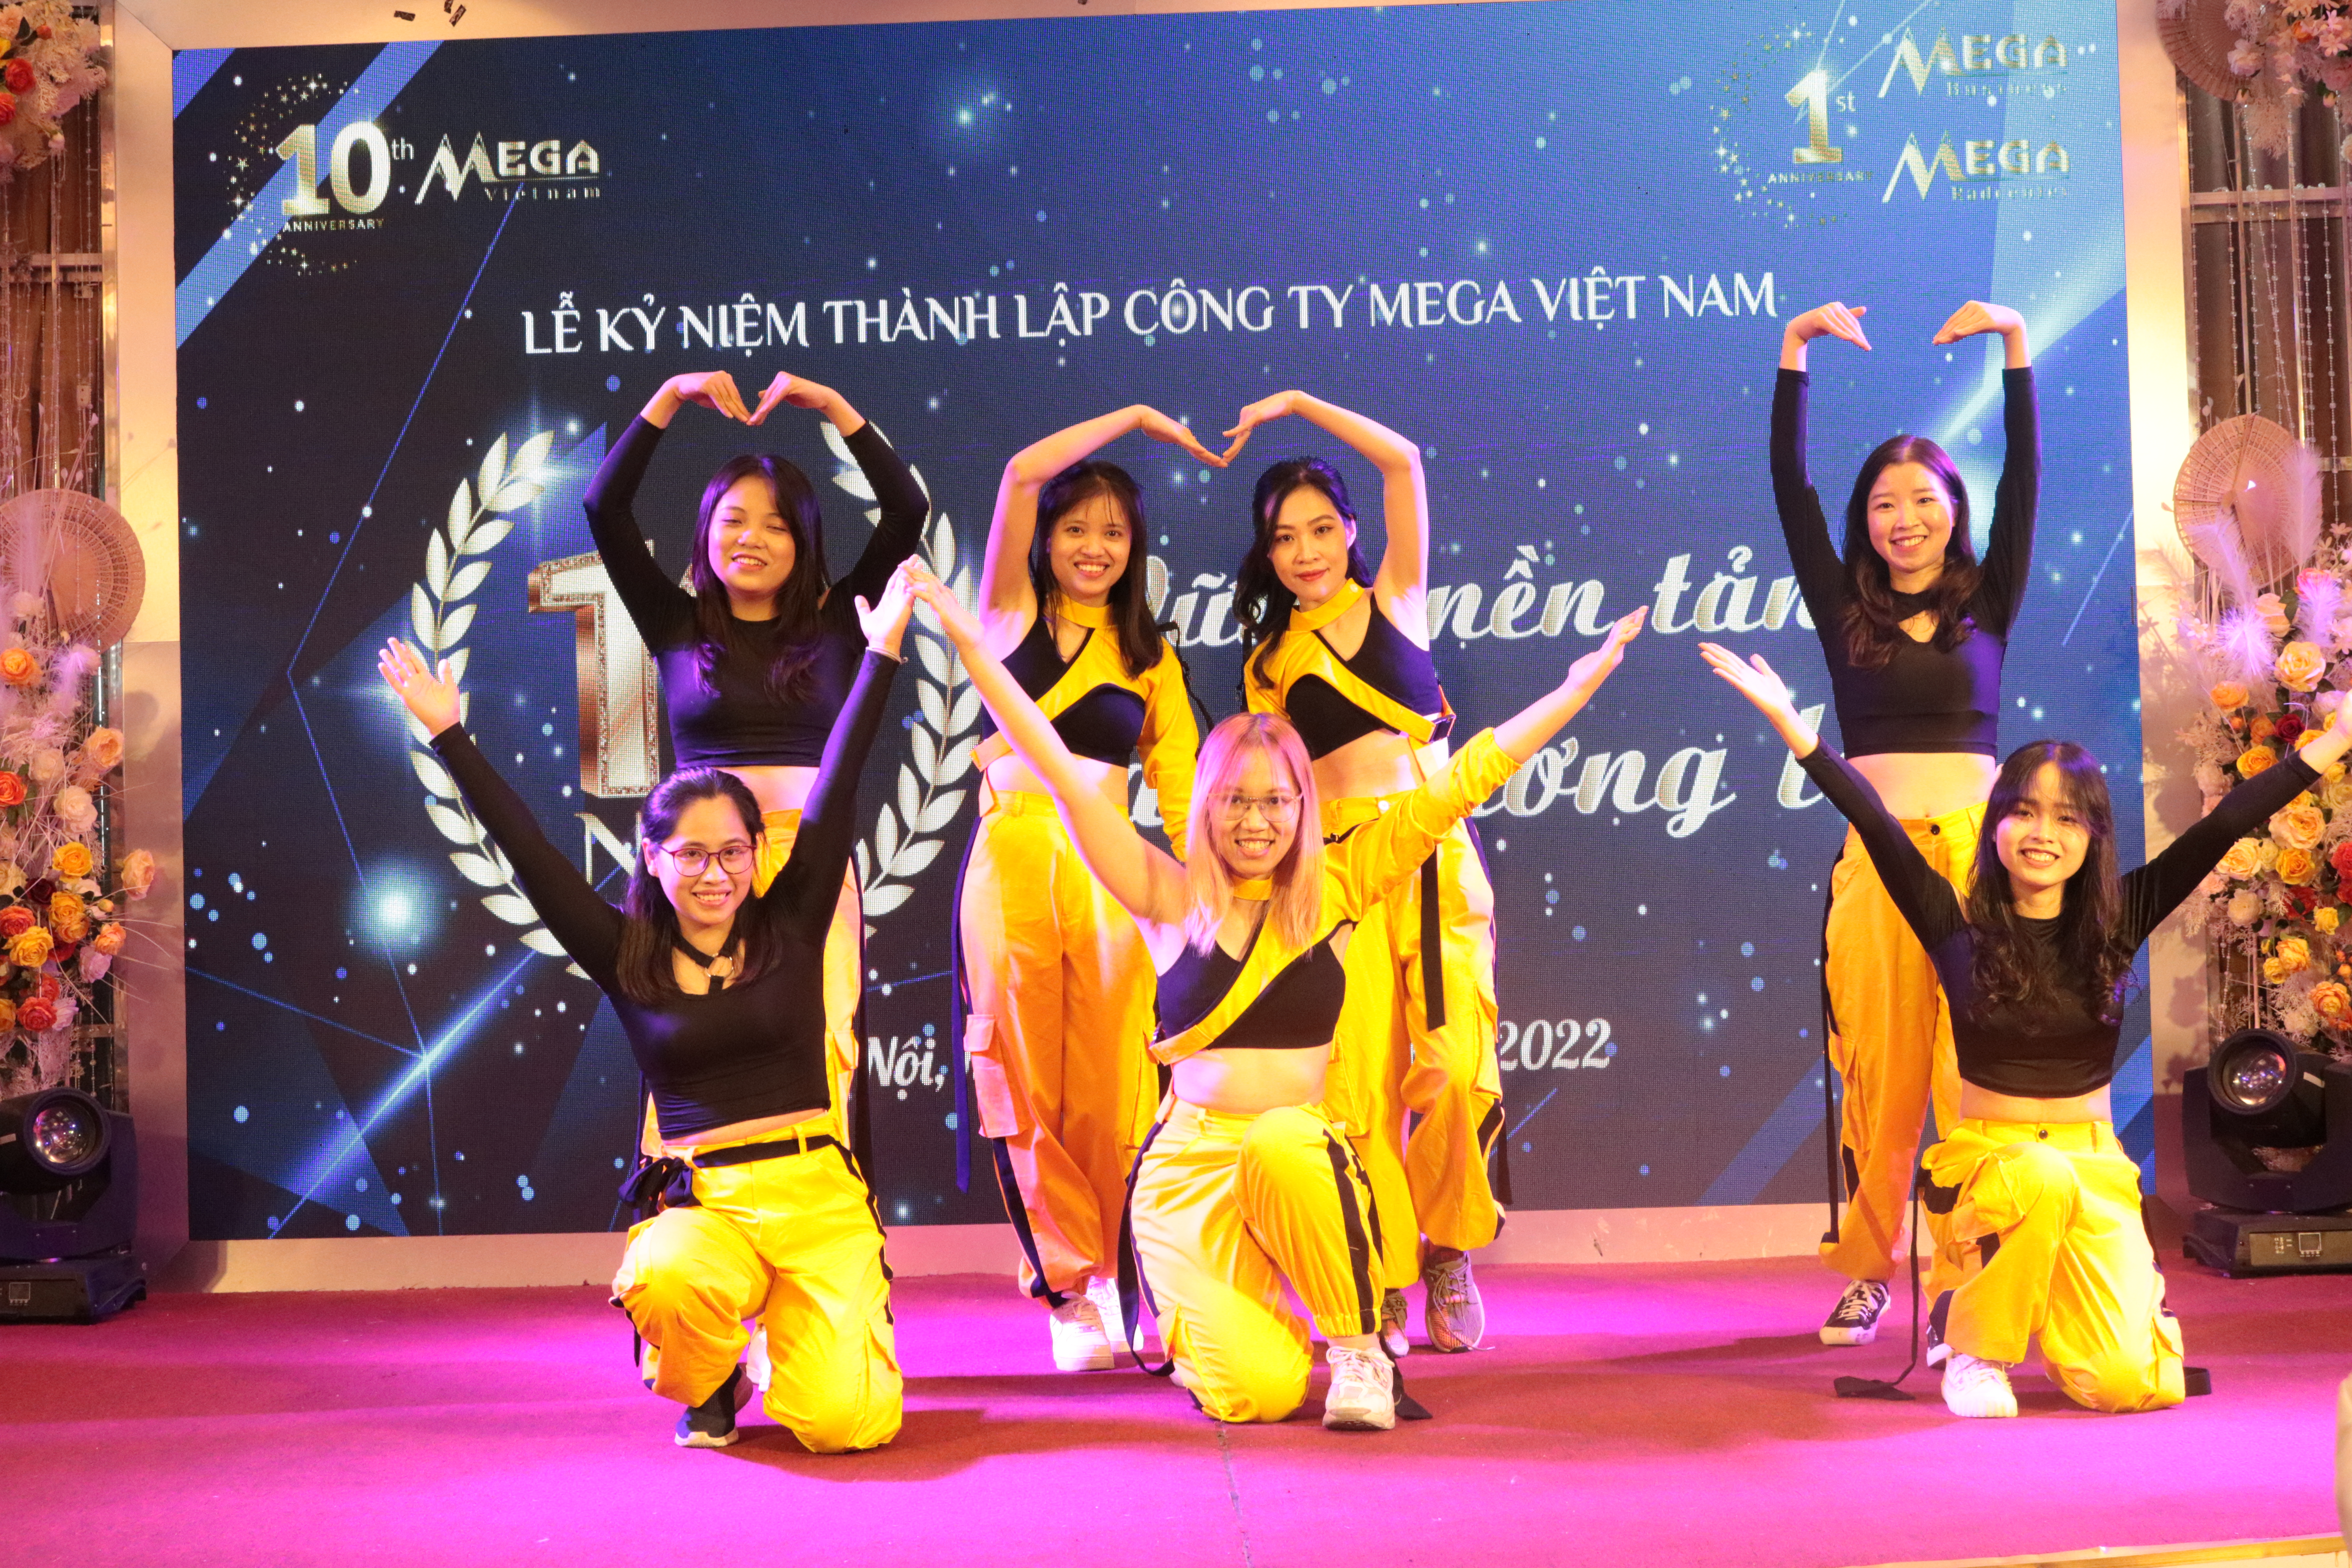 Mega Việt Nam kỷ niệm 10 năm